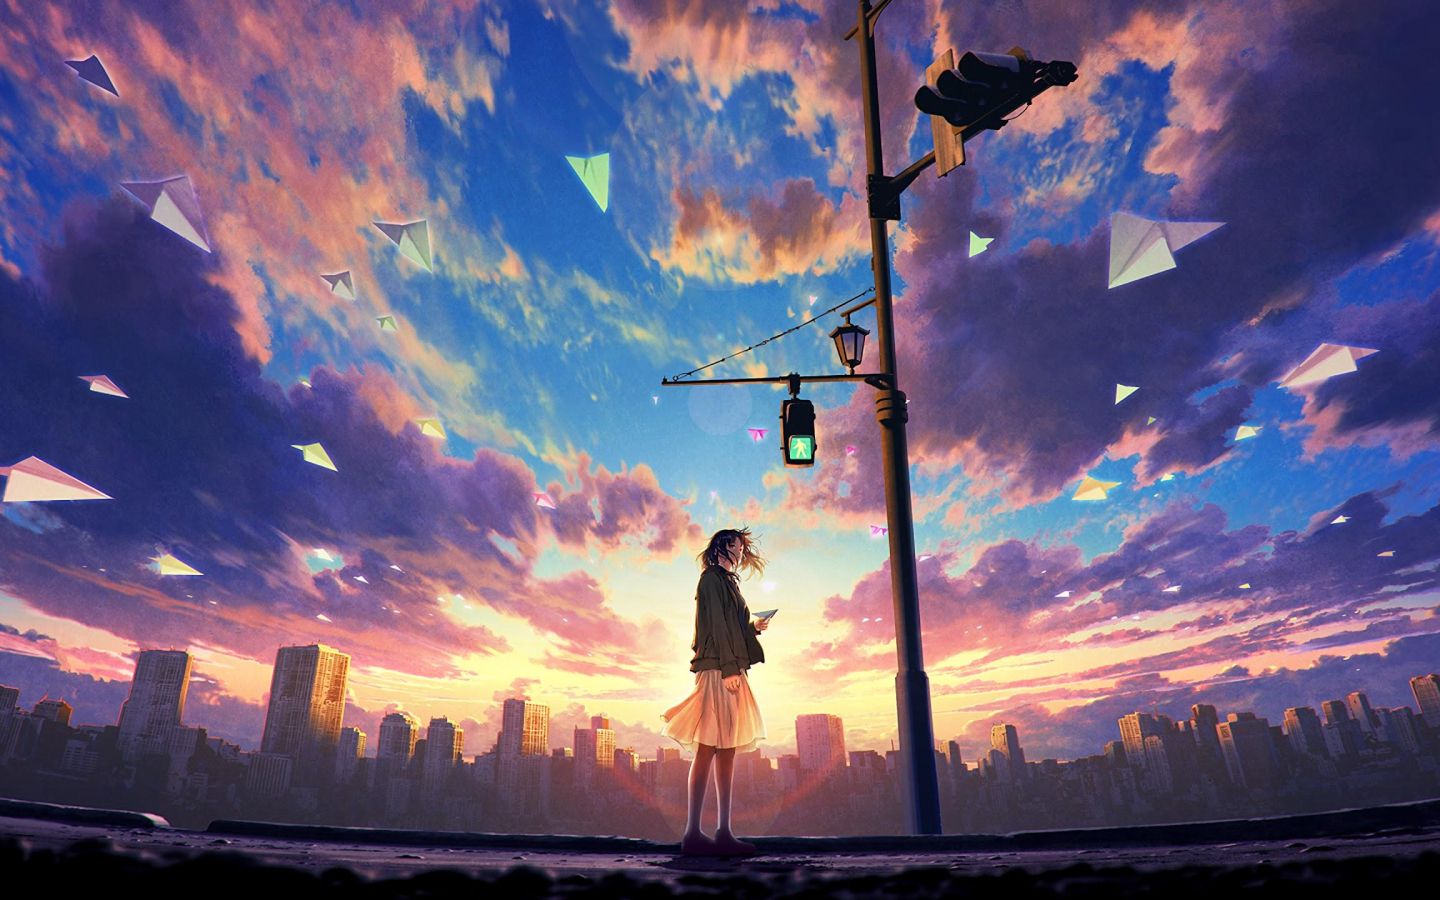 Anime-scenery wallpaper in 1440x900 resolution